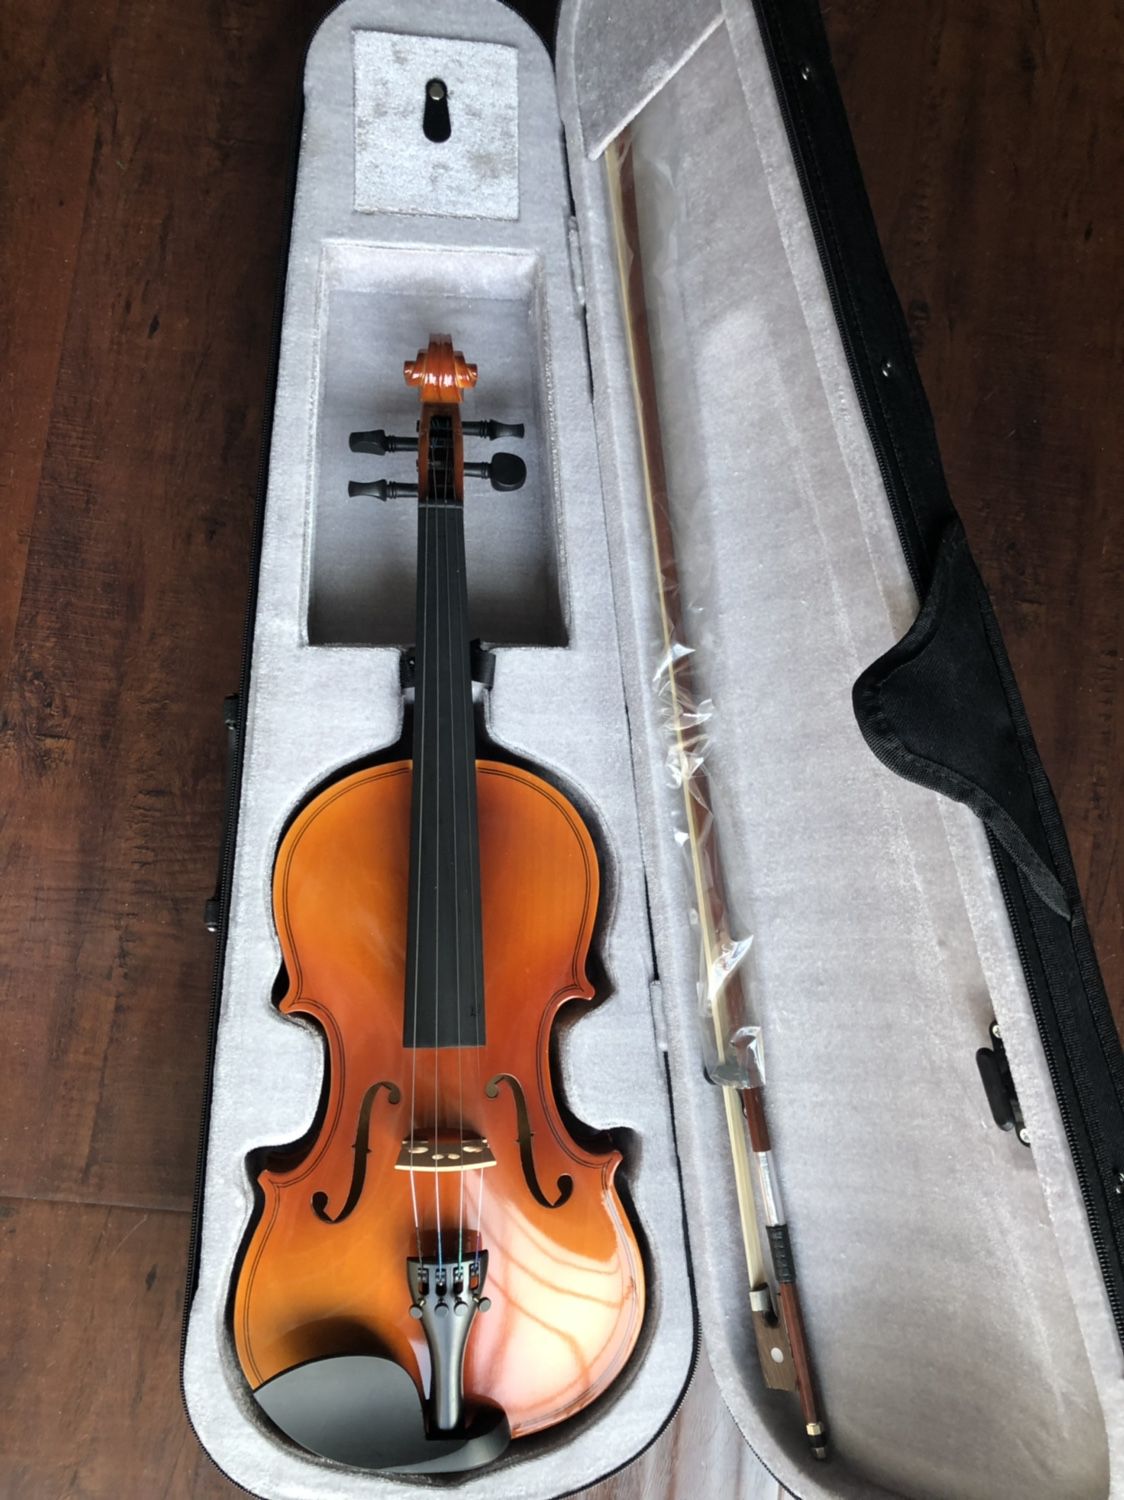 New Violin Adult Size $60, Kids Violin $50